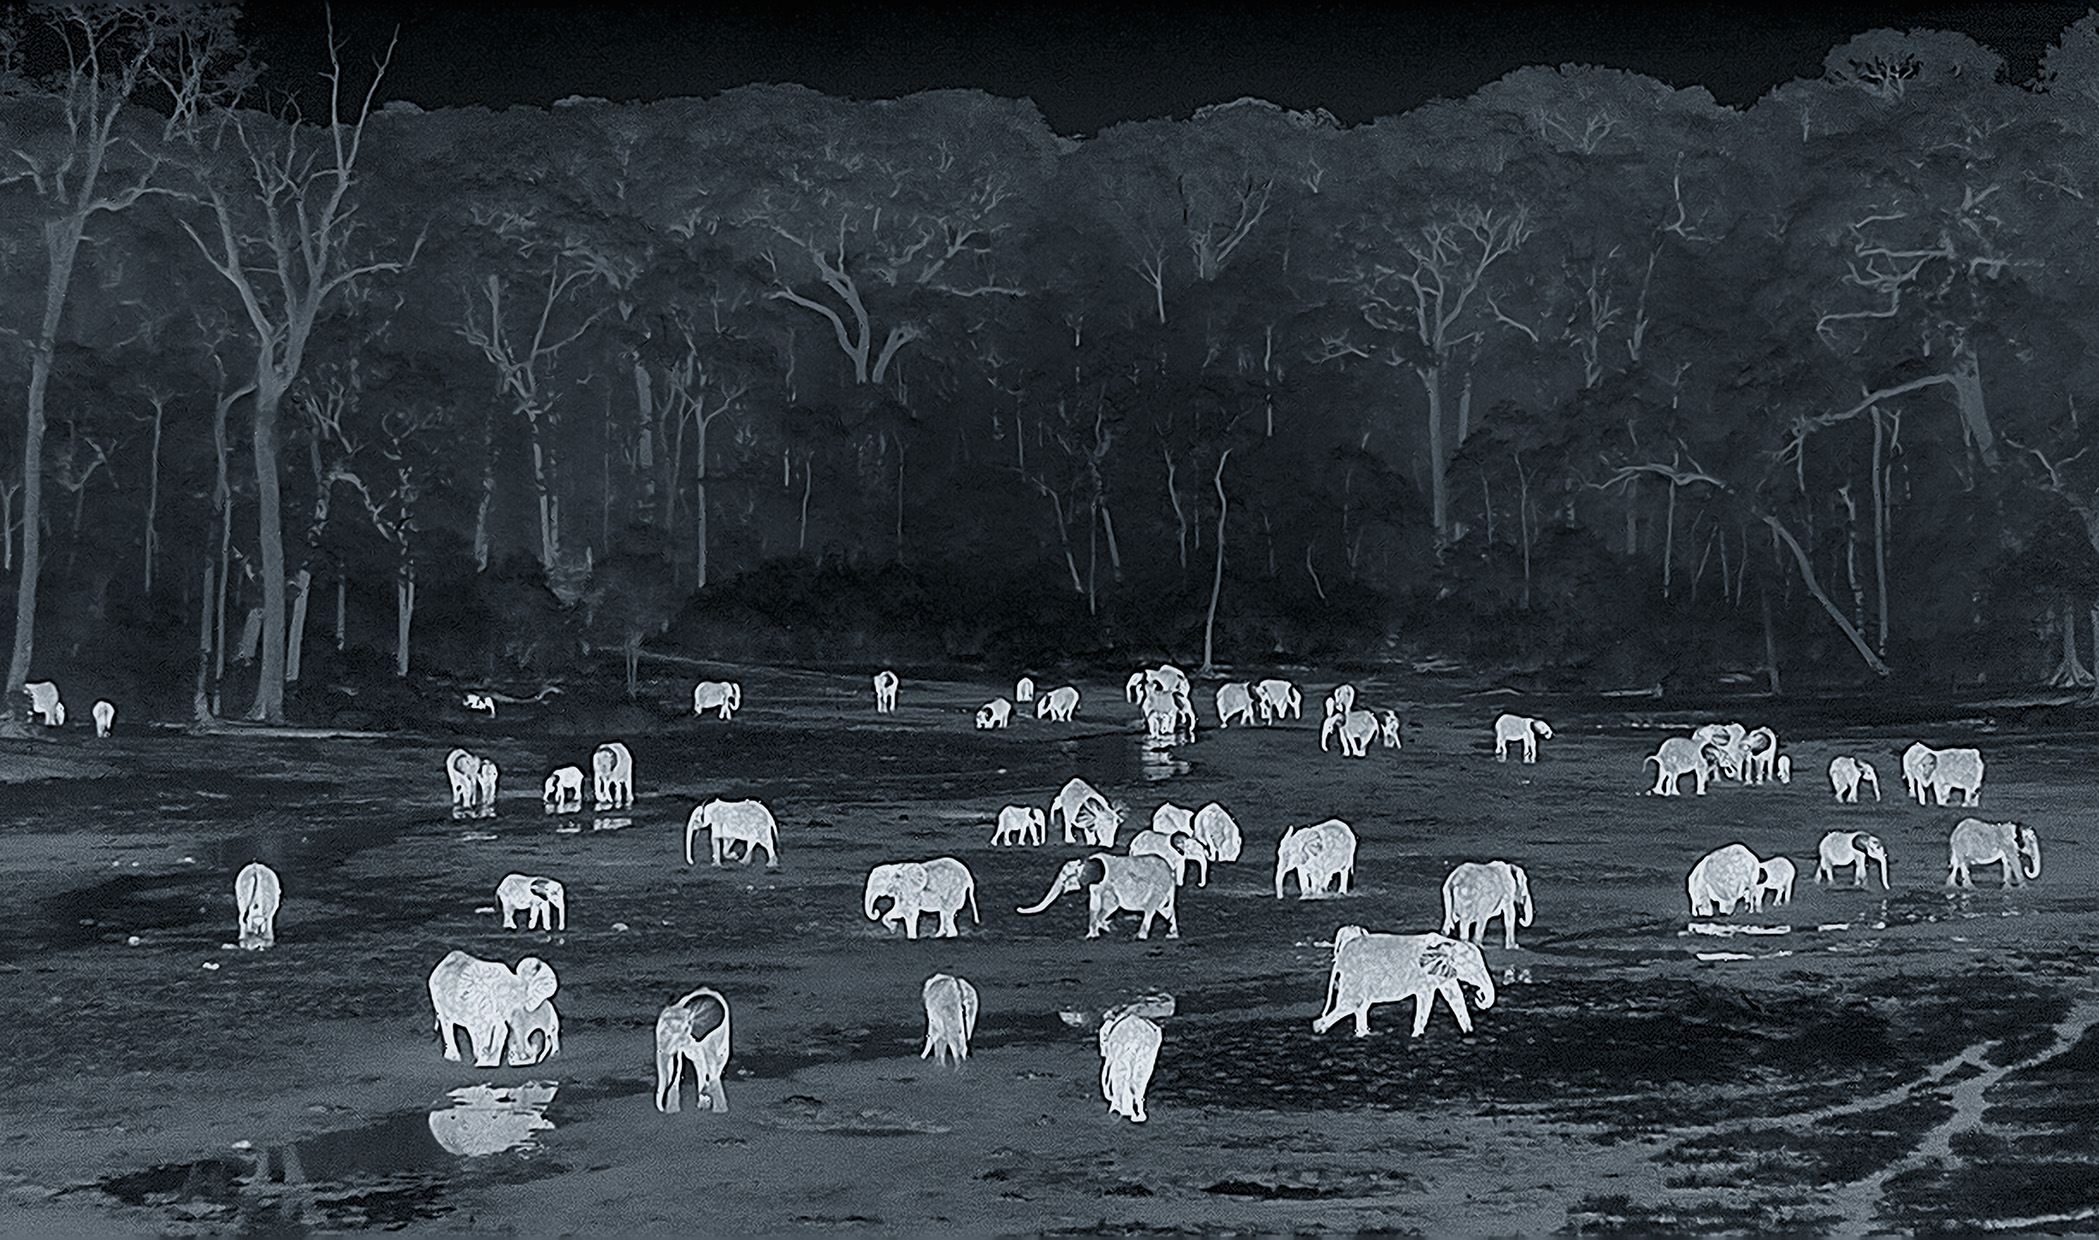 Night-cam image of Elephants in Dzanga Bai.